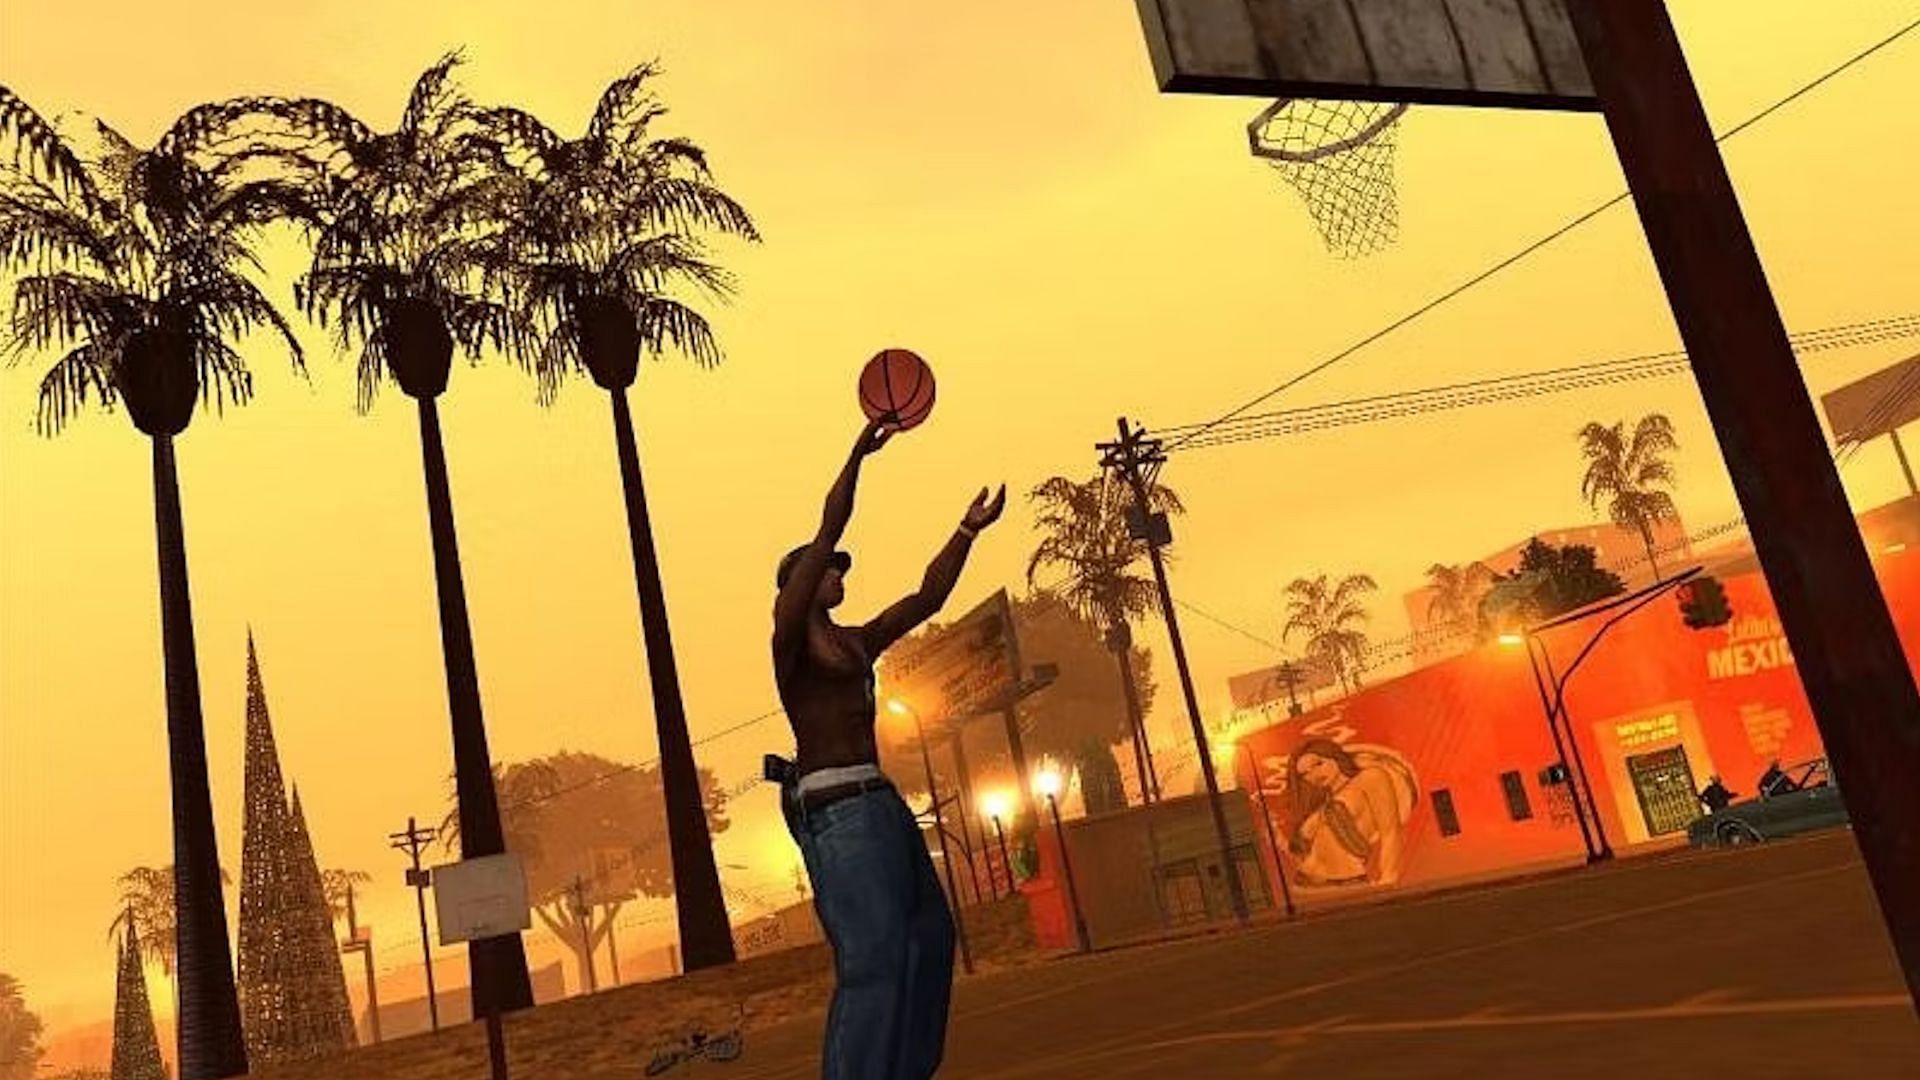 A player enjoying basketball (Image via blahman88)